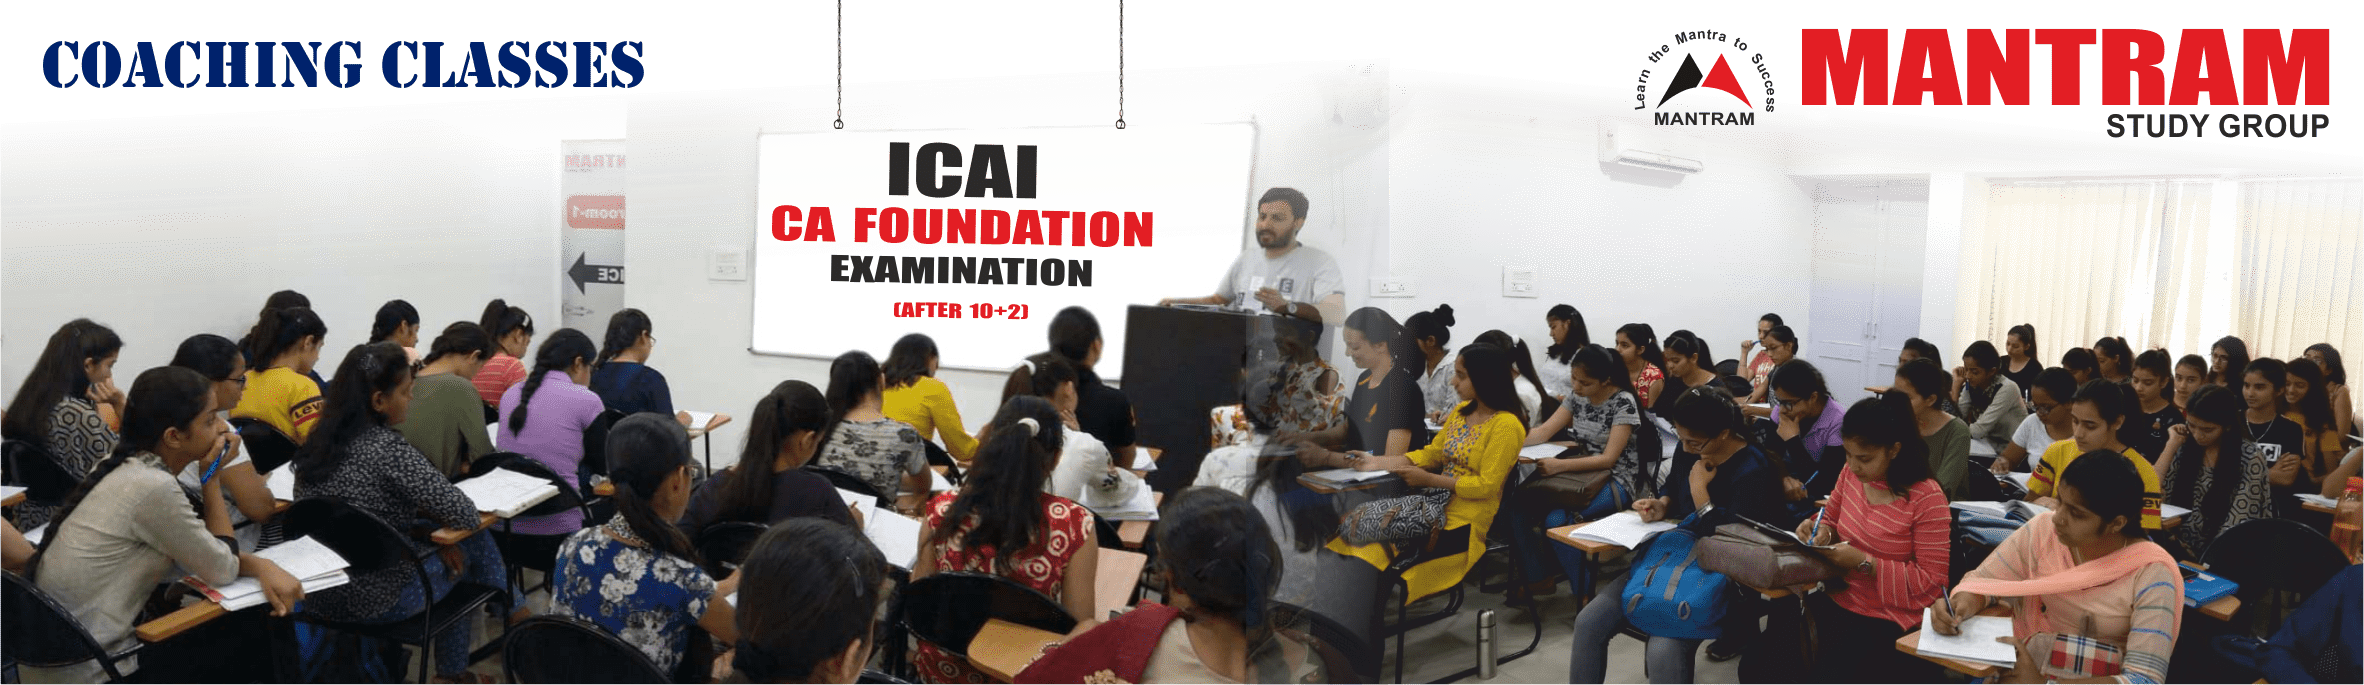 ICAI CA FOUNDATION EXAMINATION COACHING CLASSES